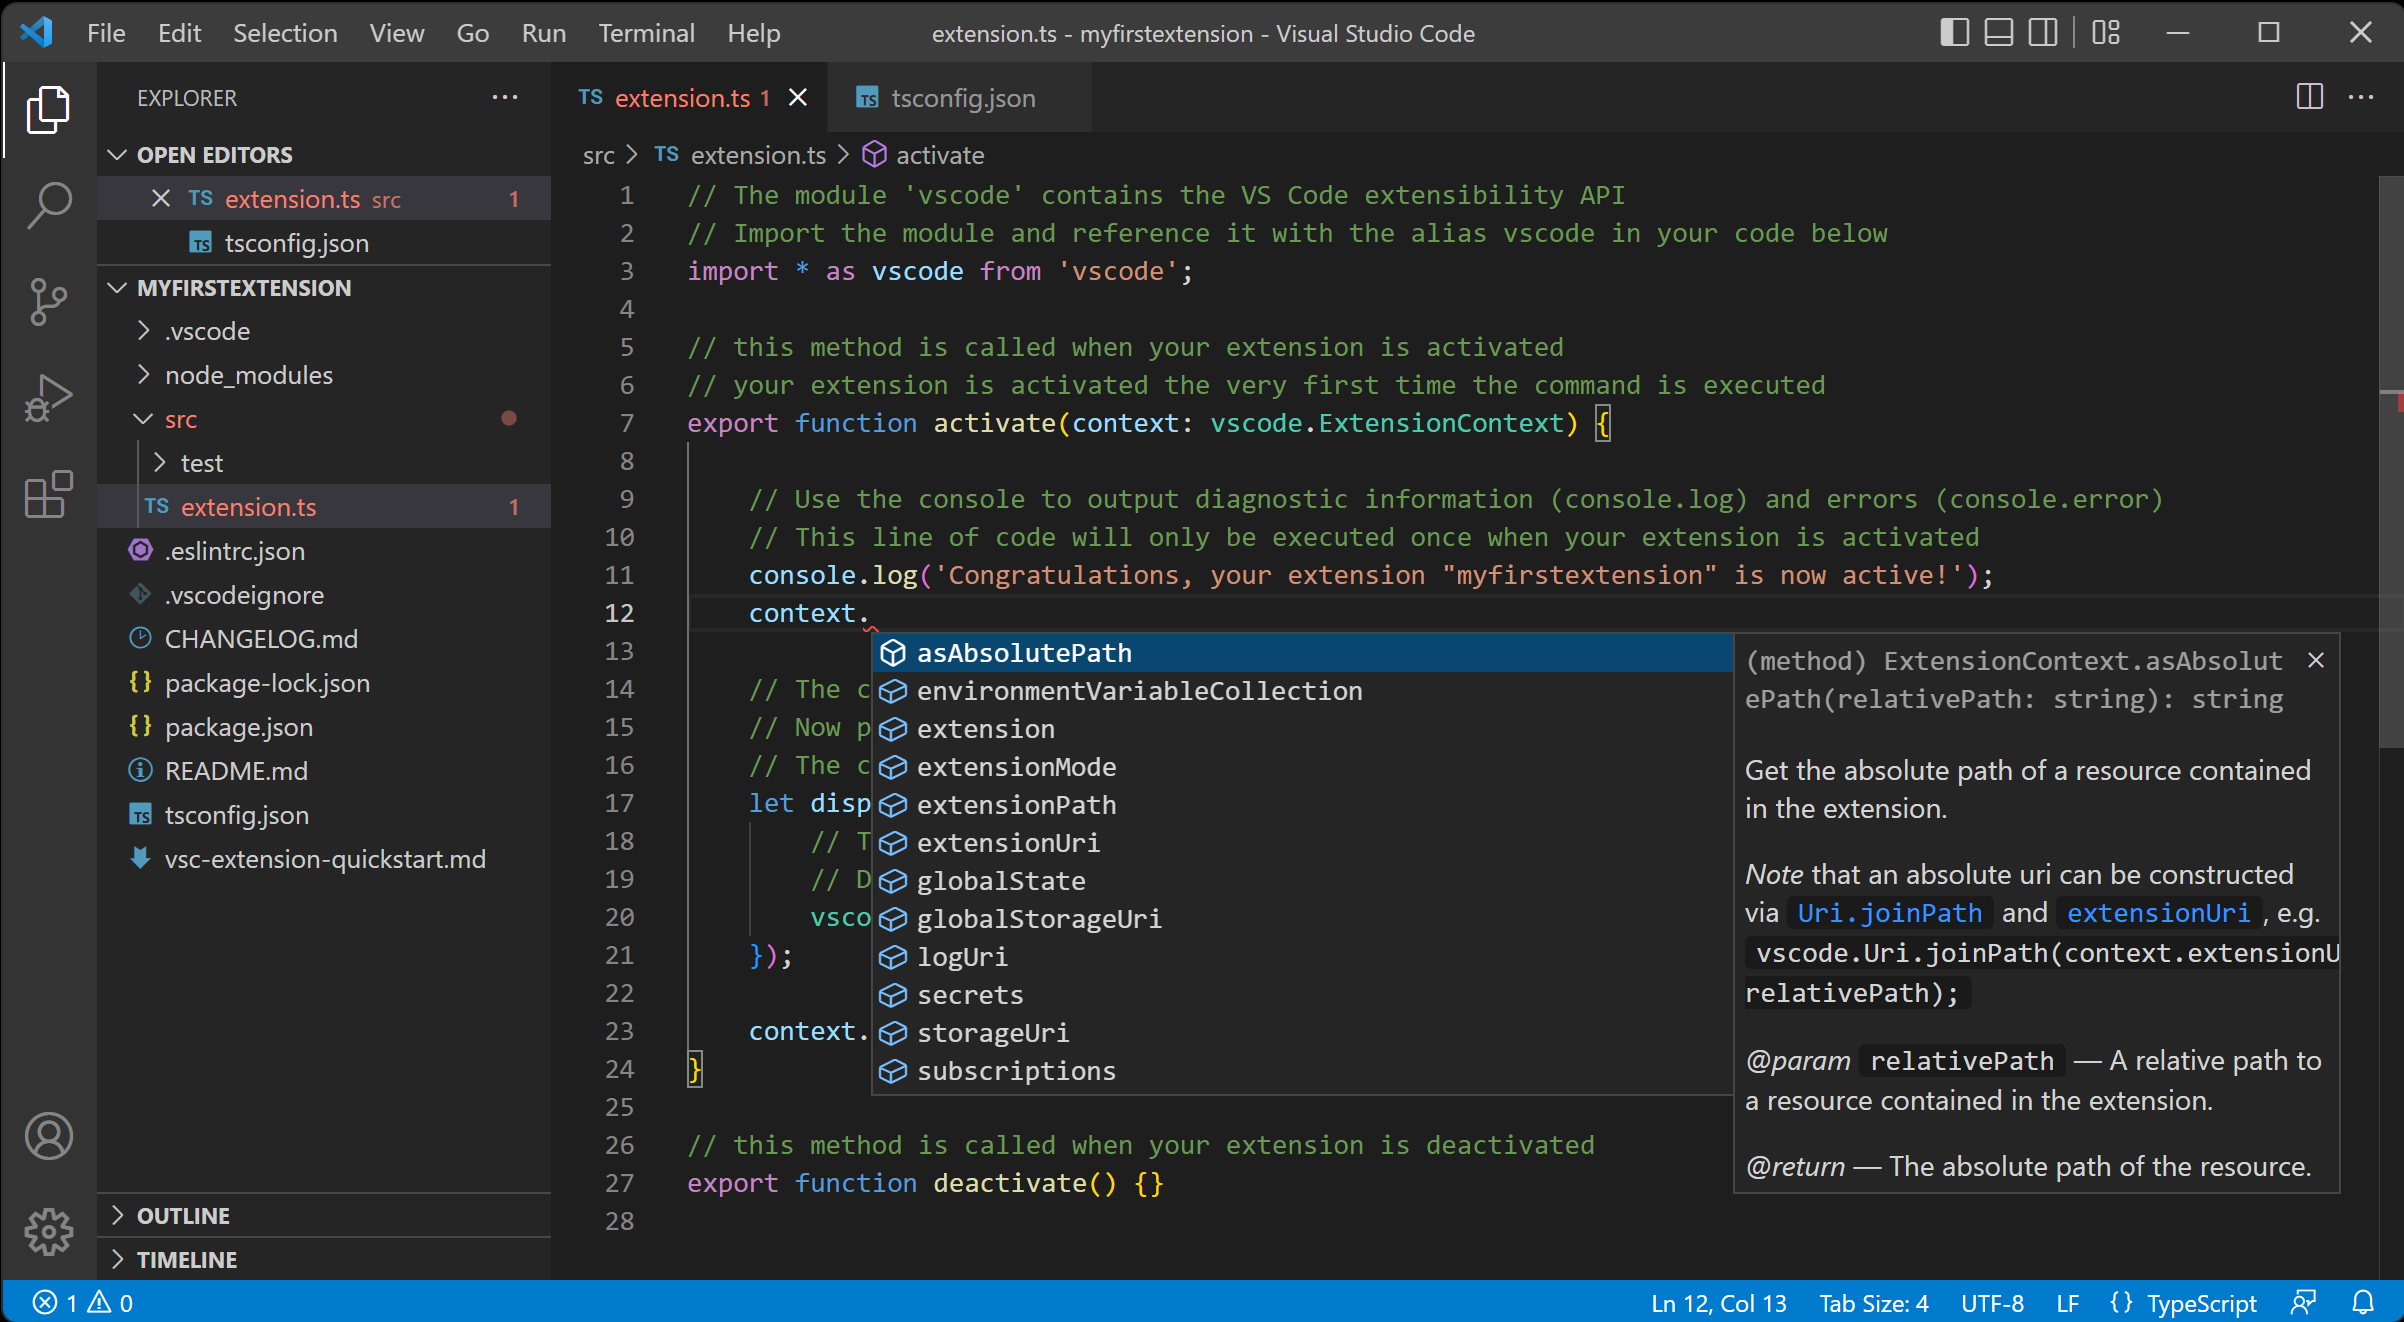 Working with TypeScript in Visual Studio Code